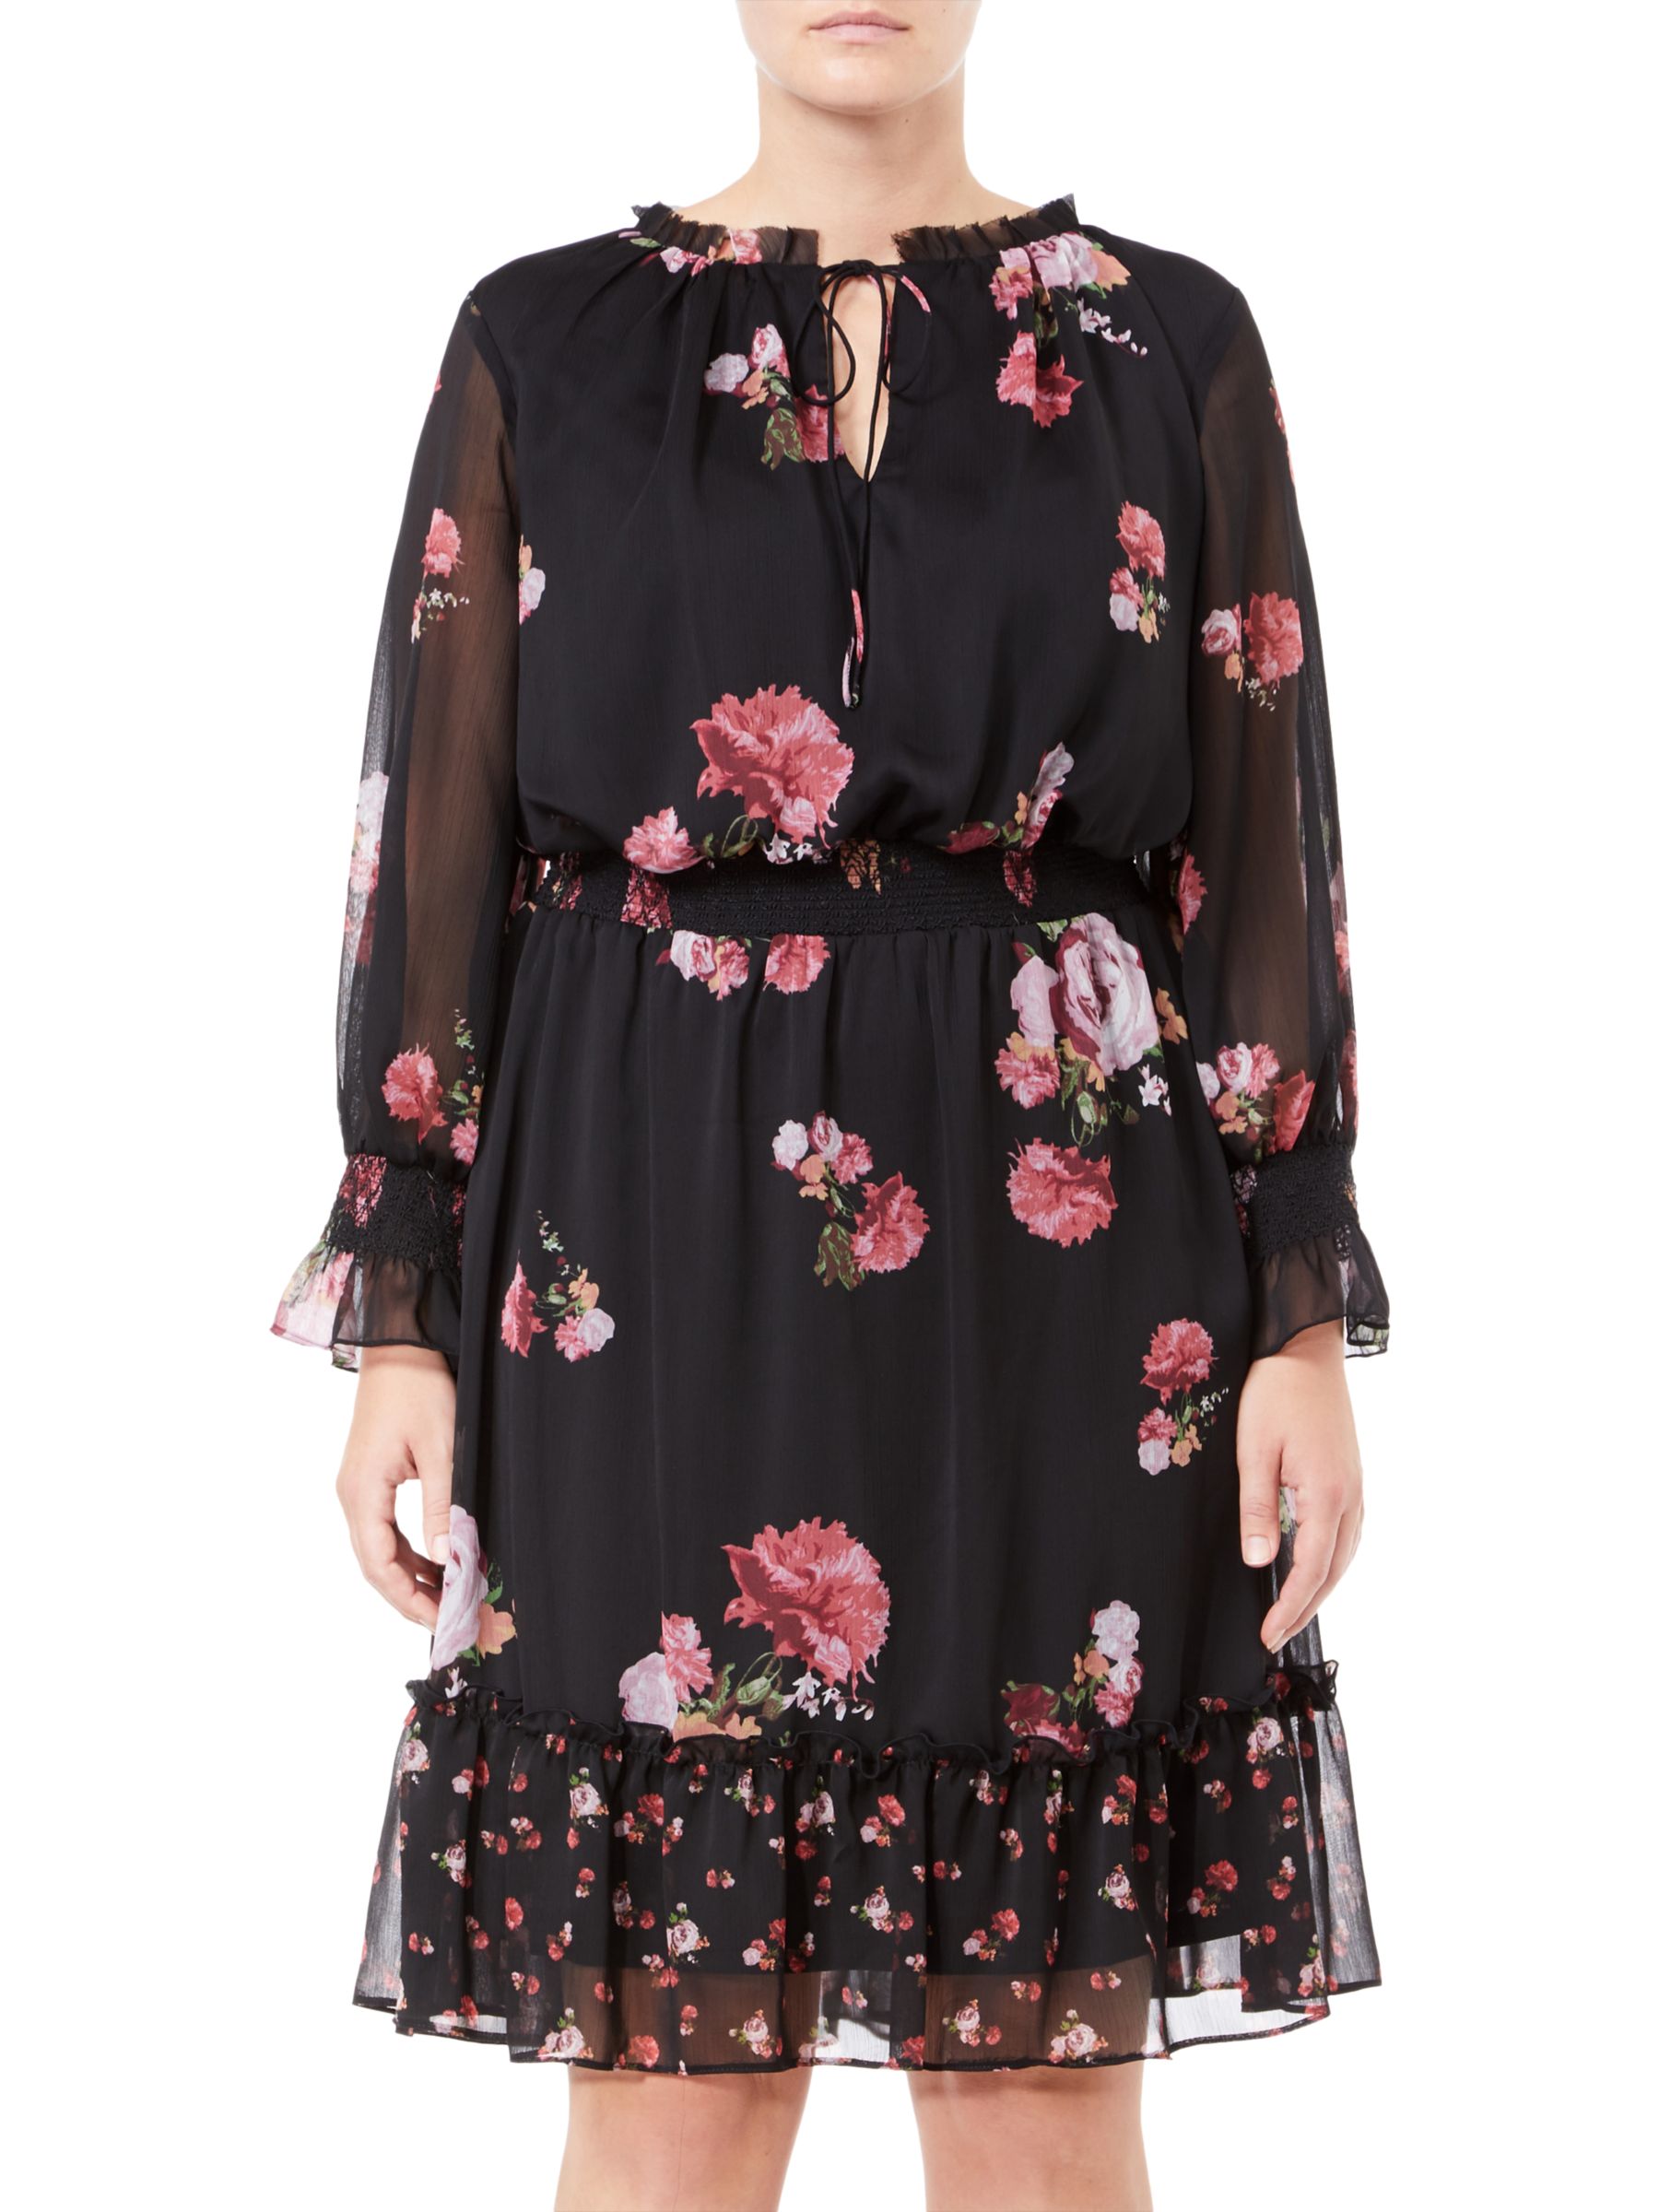 Adrianna Papell Plus Size Loving Floral Dress, Black